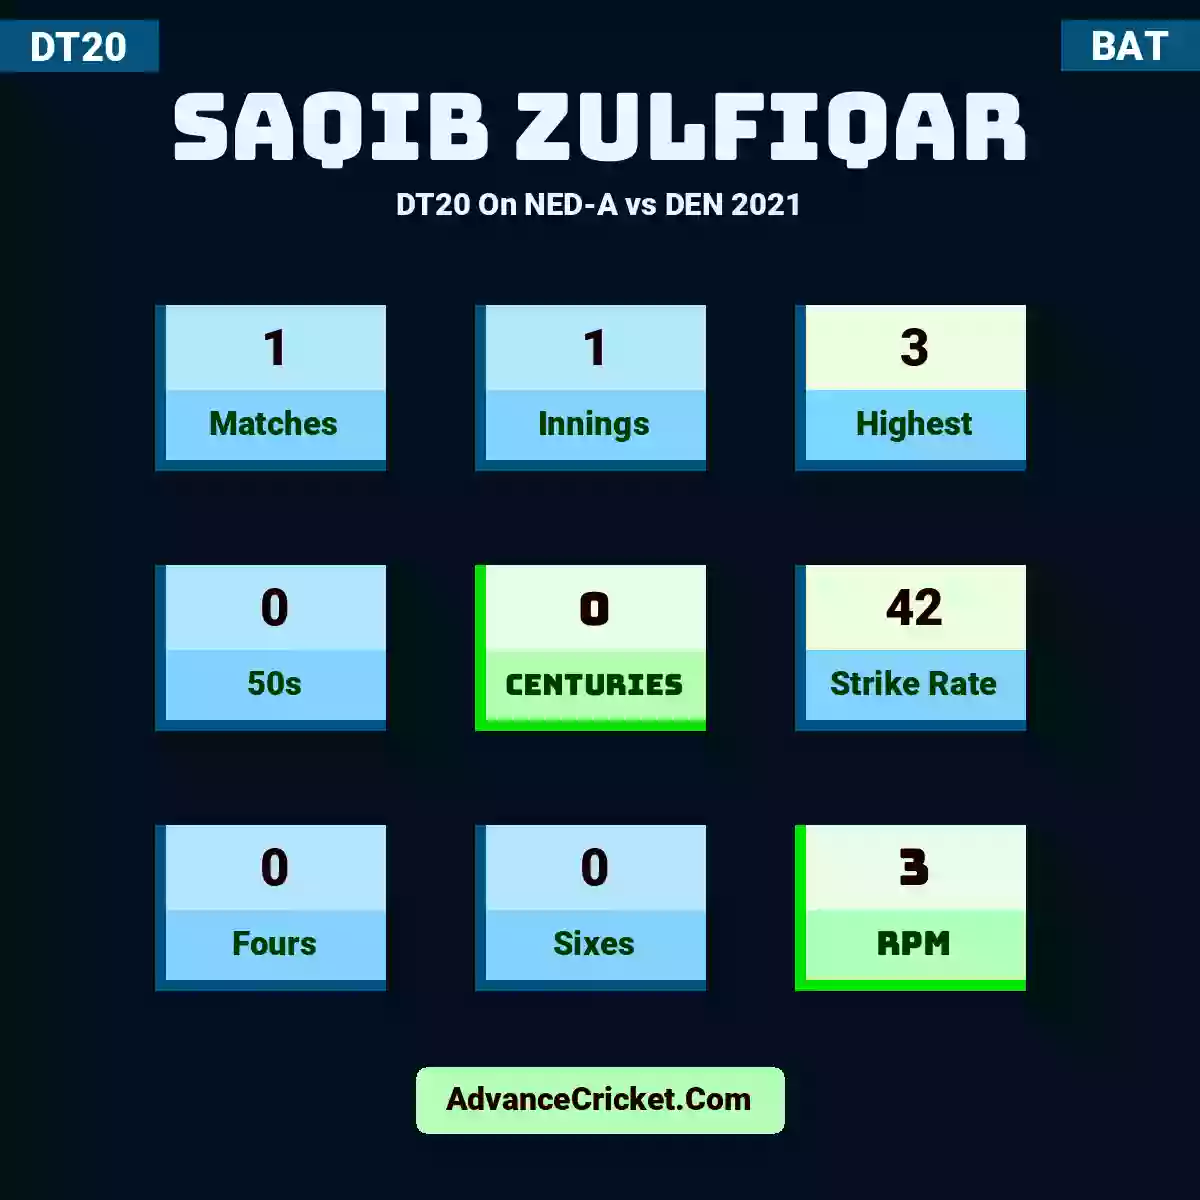 Saqib Zulfiqar DT20  On NED-A vs DEN 2021, Saqib Zulfiqar played 1 matches, scored 3 runs as highest, 0 half-centuries, and 0 centuries, with a strike rate of 42. S.Zulfiqar hit 0 fours and 0 sixes, with an RPM of 3.